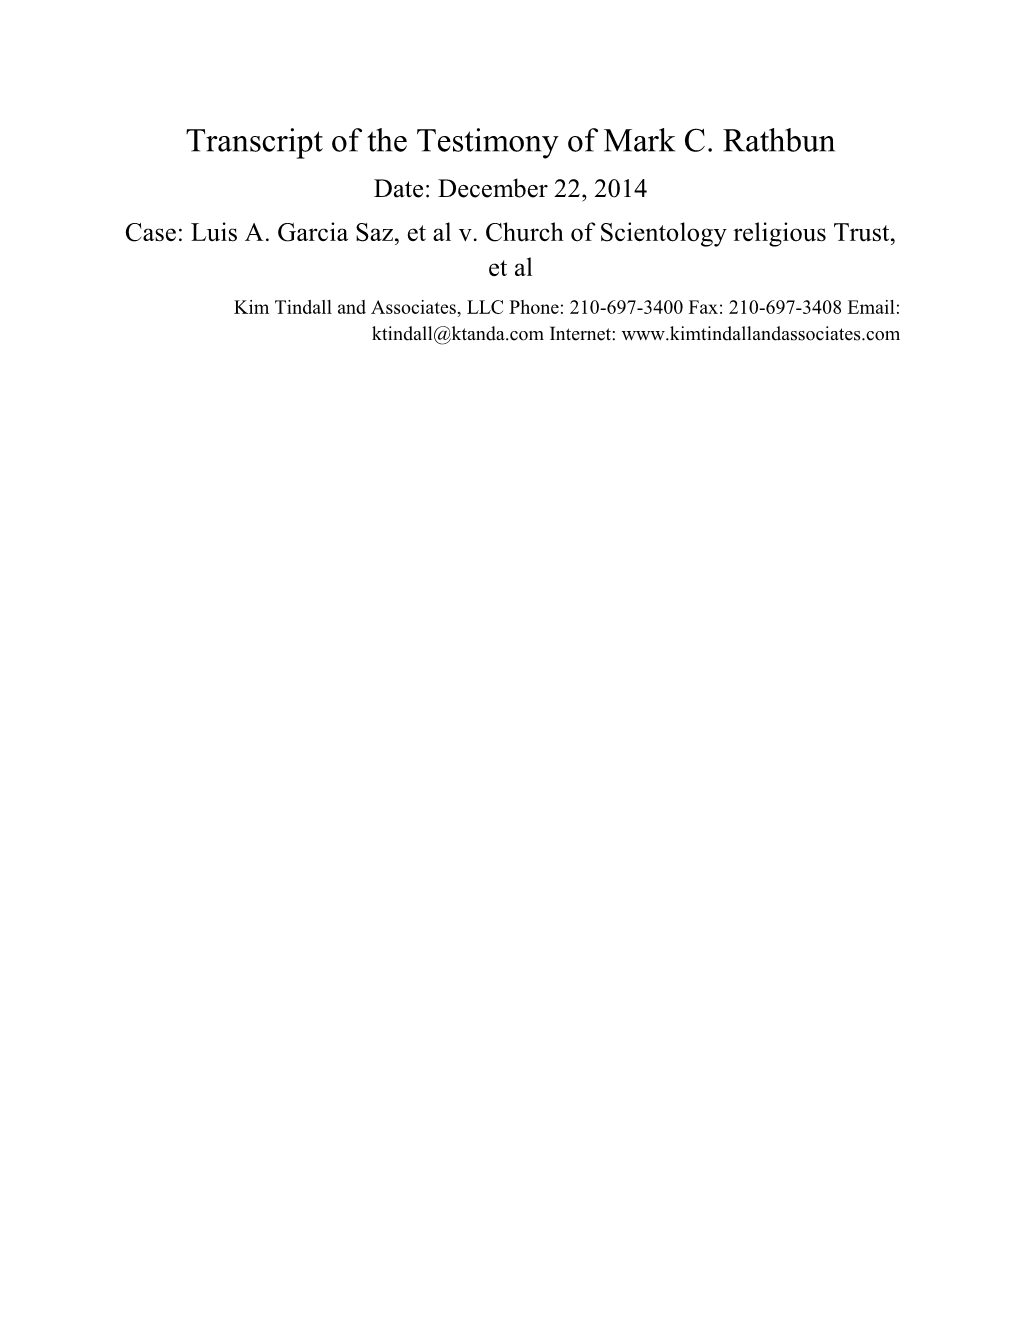 Transcript of the Testimony of Mark C. Rathbun Date: December 22, 2014 Case: Luis A